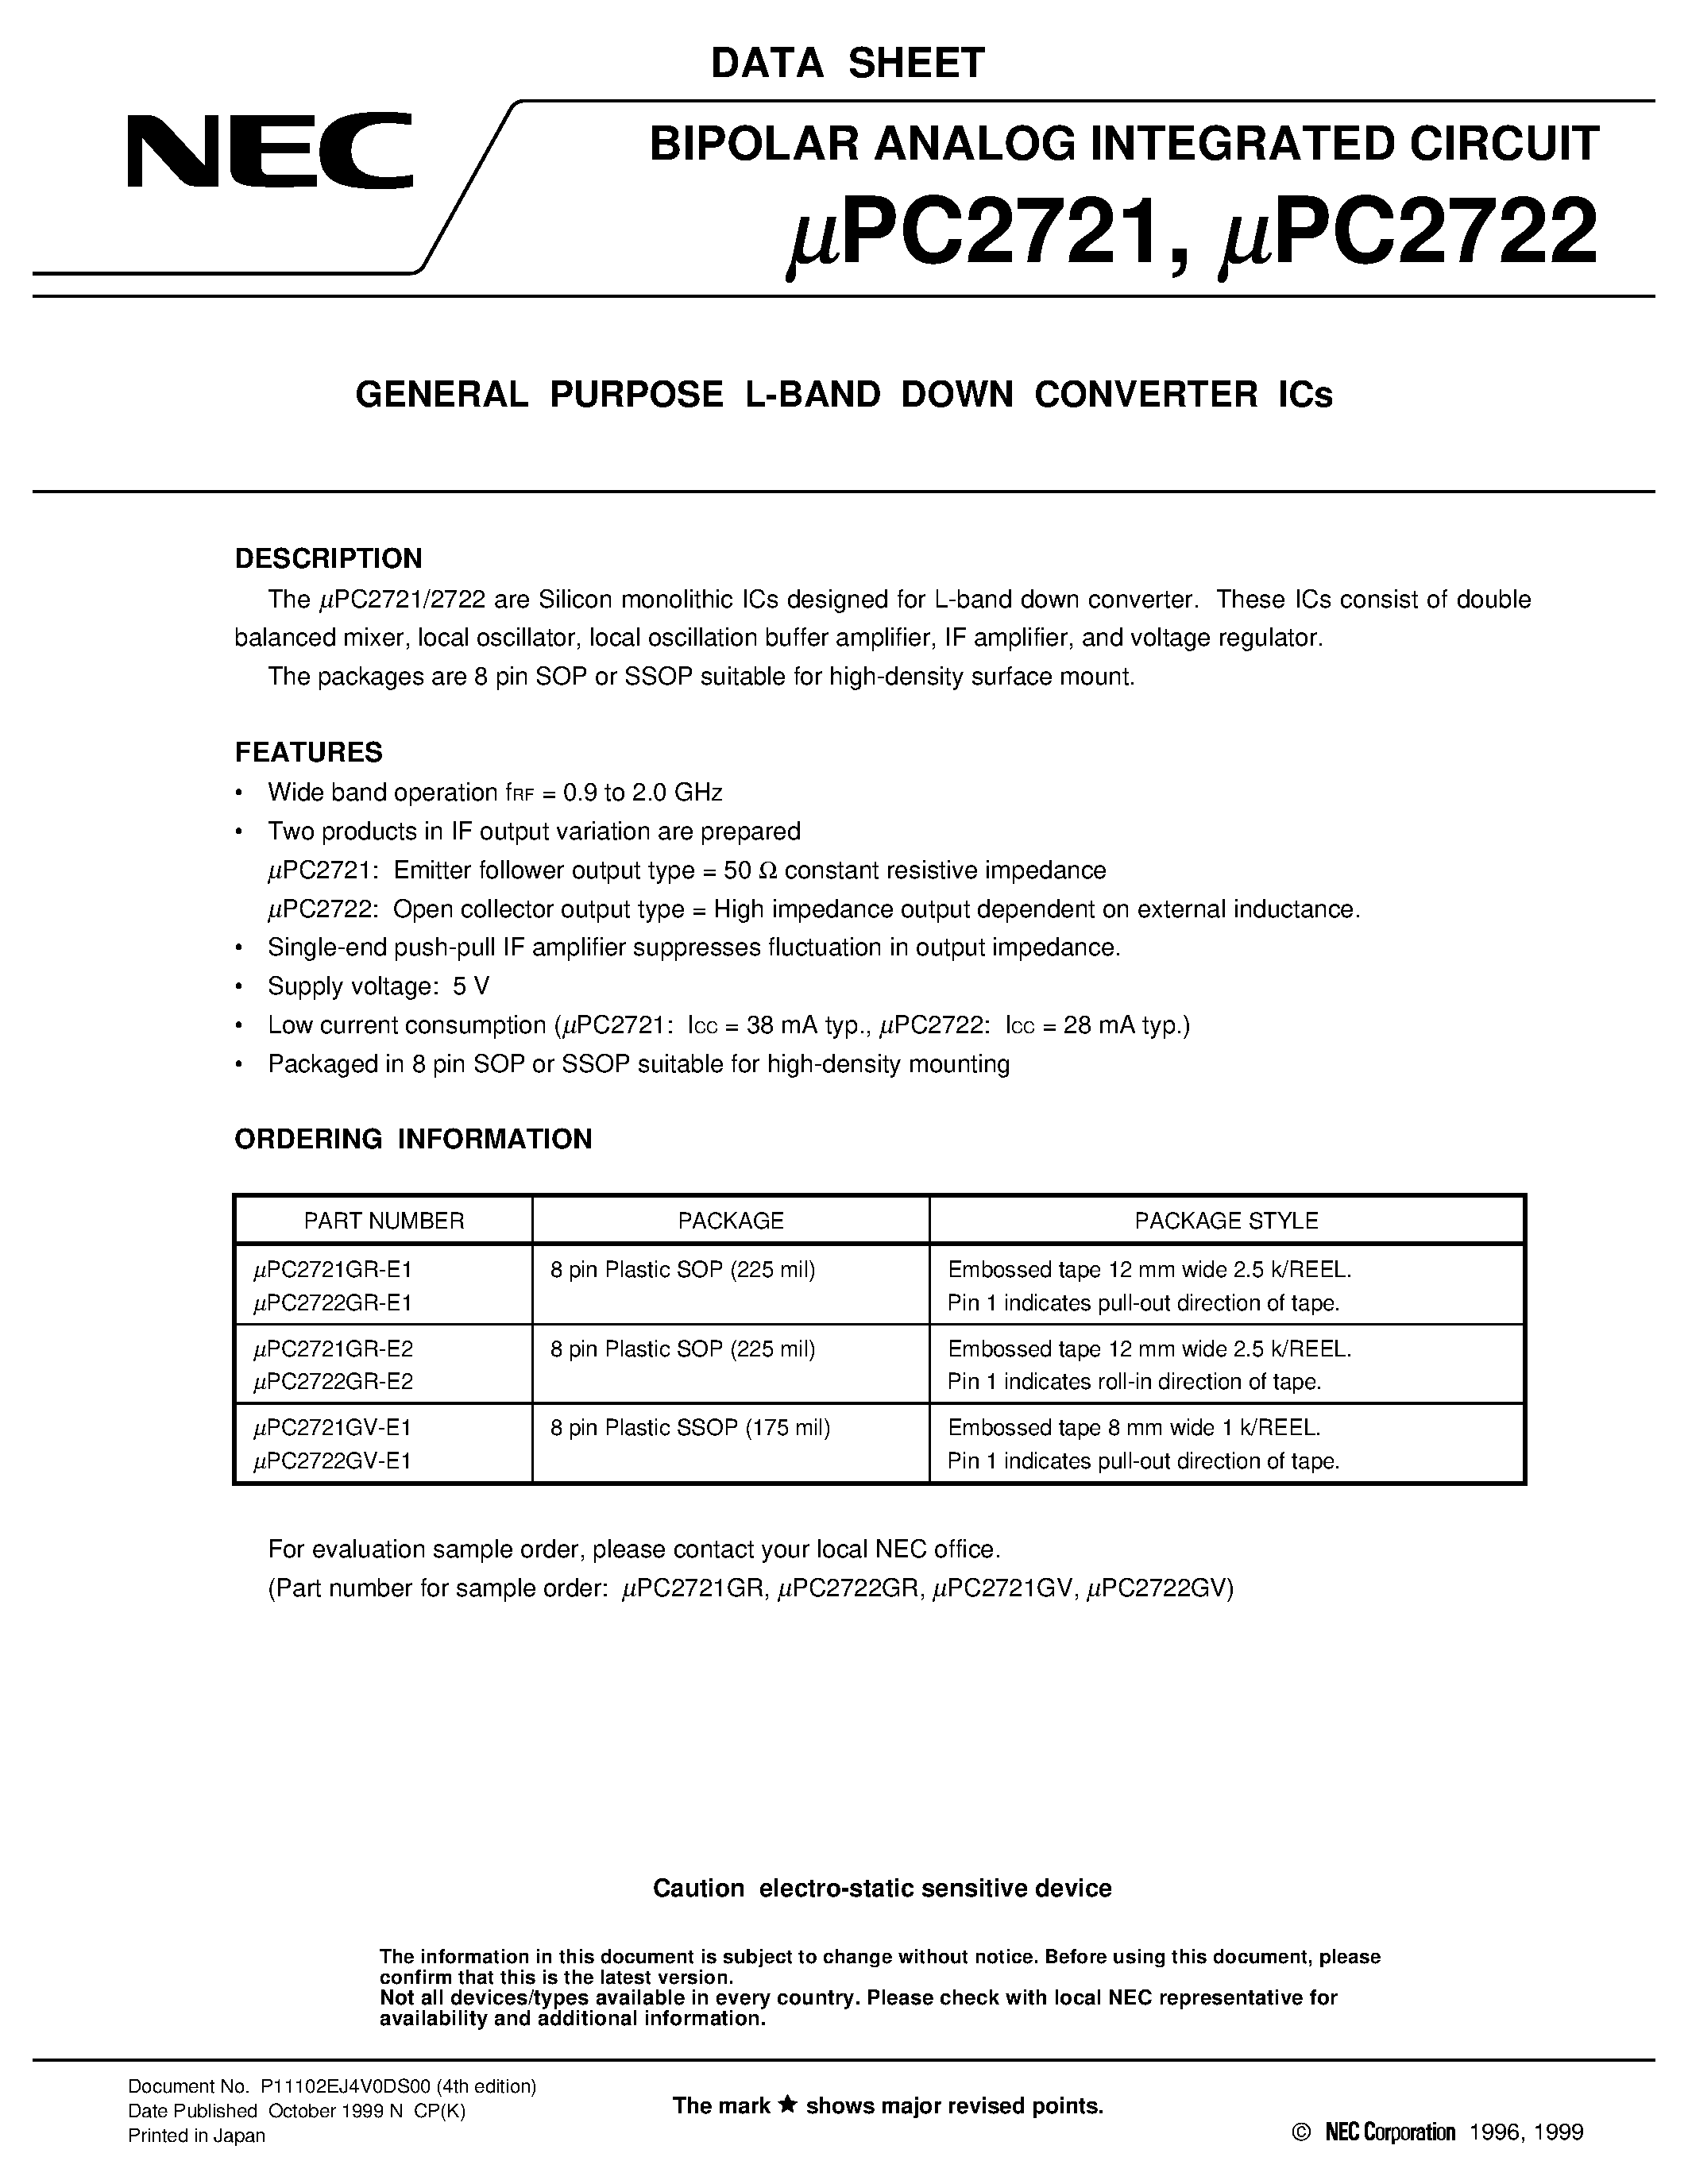 Datasheet UPC2721GR-E1 - GENERAL PURPOSE L-BAND DOWN CONVERTER ICs page 1